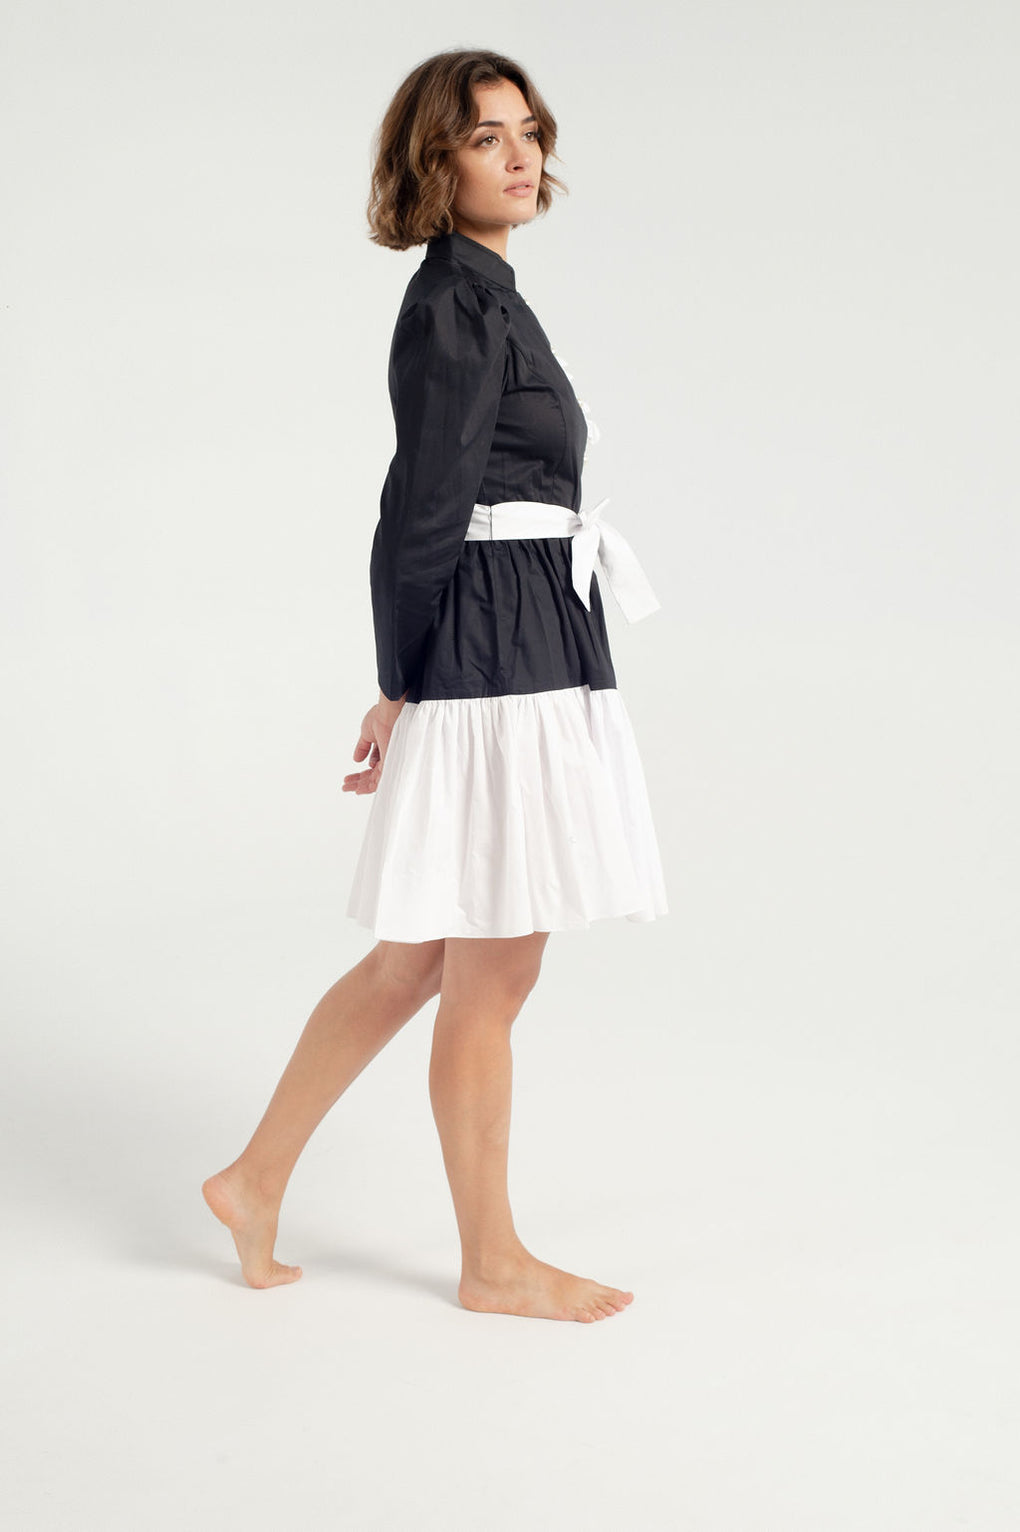 Batsheva-Long sleeve sadie dress-Batsheva black and white dress-Batsheva sadie dress-Idun-St. Paul